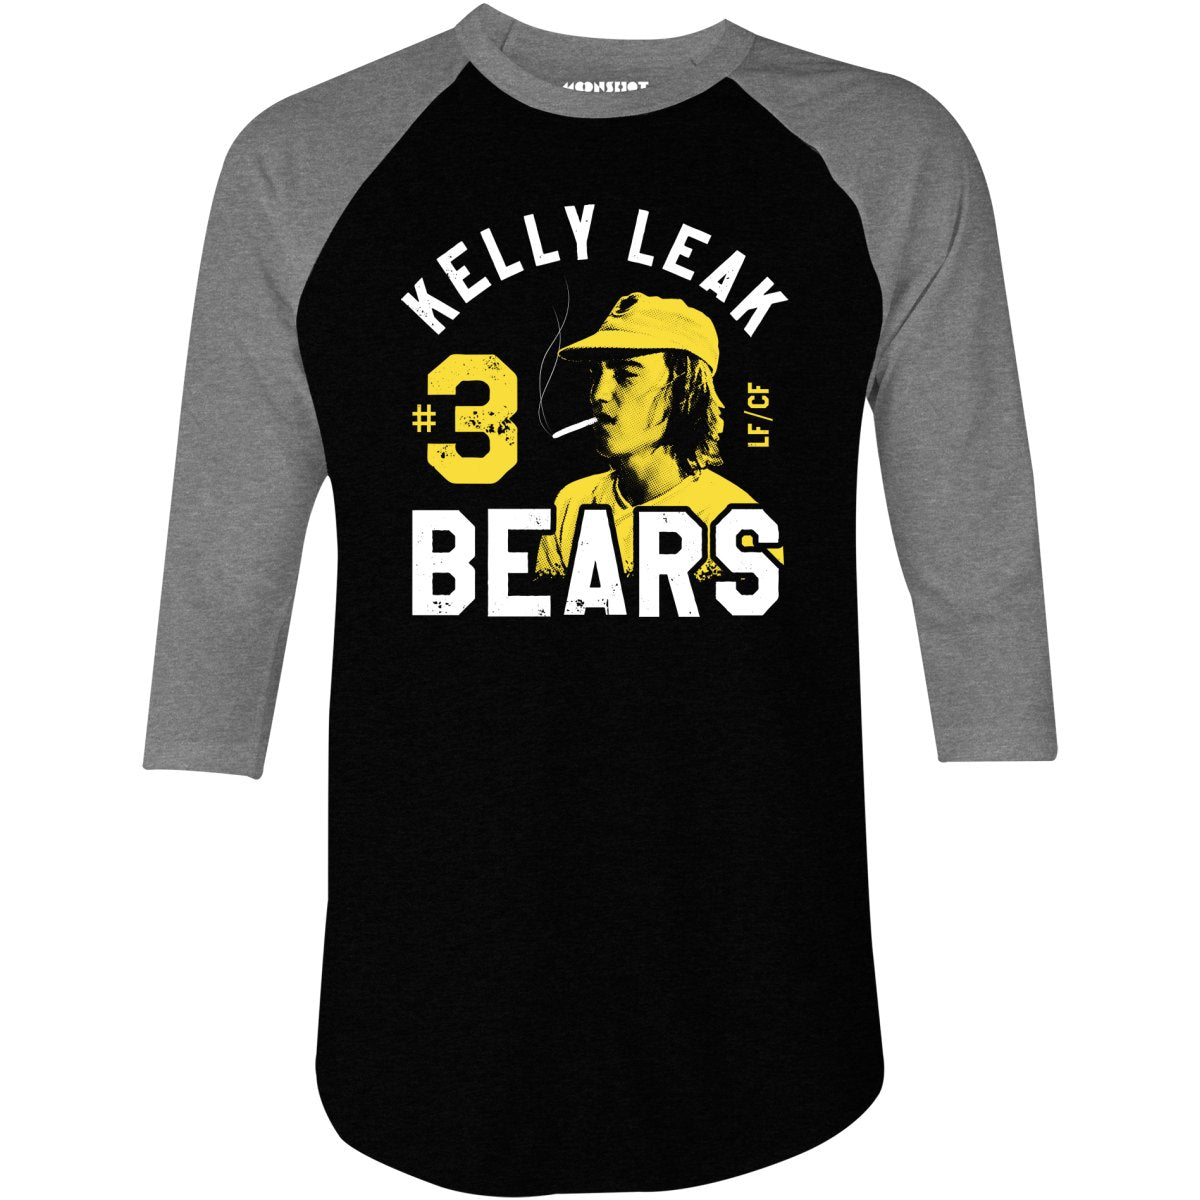 Kelly Leak #3 Bears - 3/4 Sleeve Raglan T-Shirt